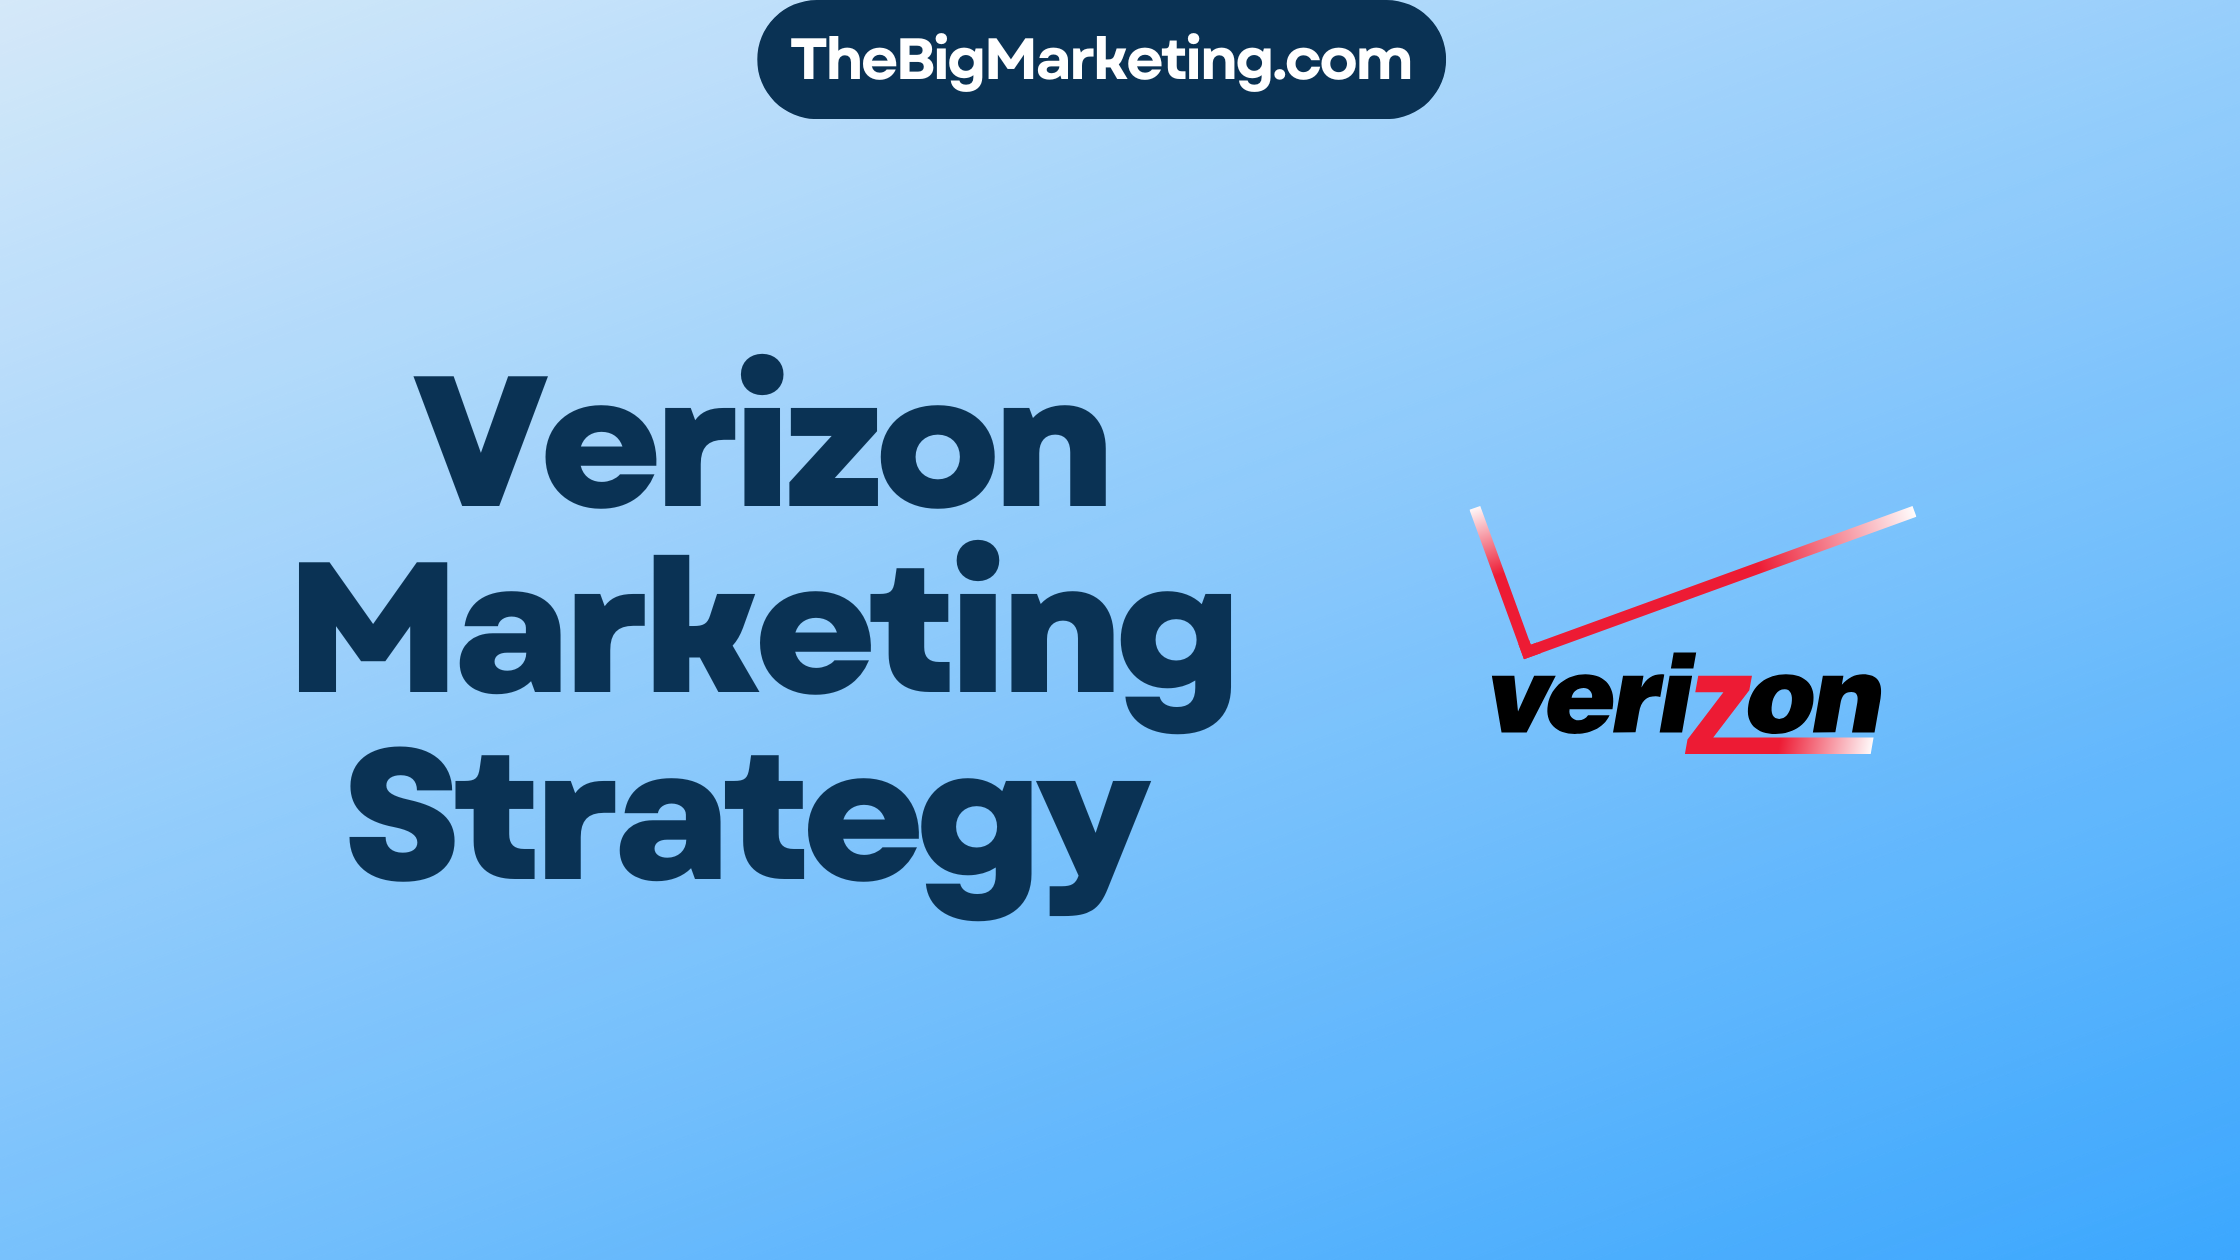 Verizon Marketing Strategy